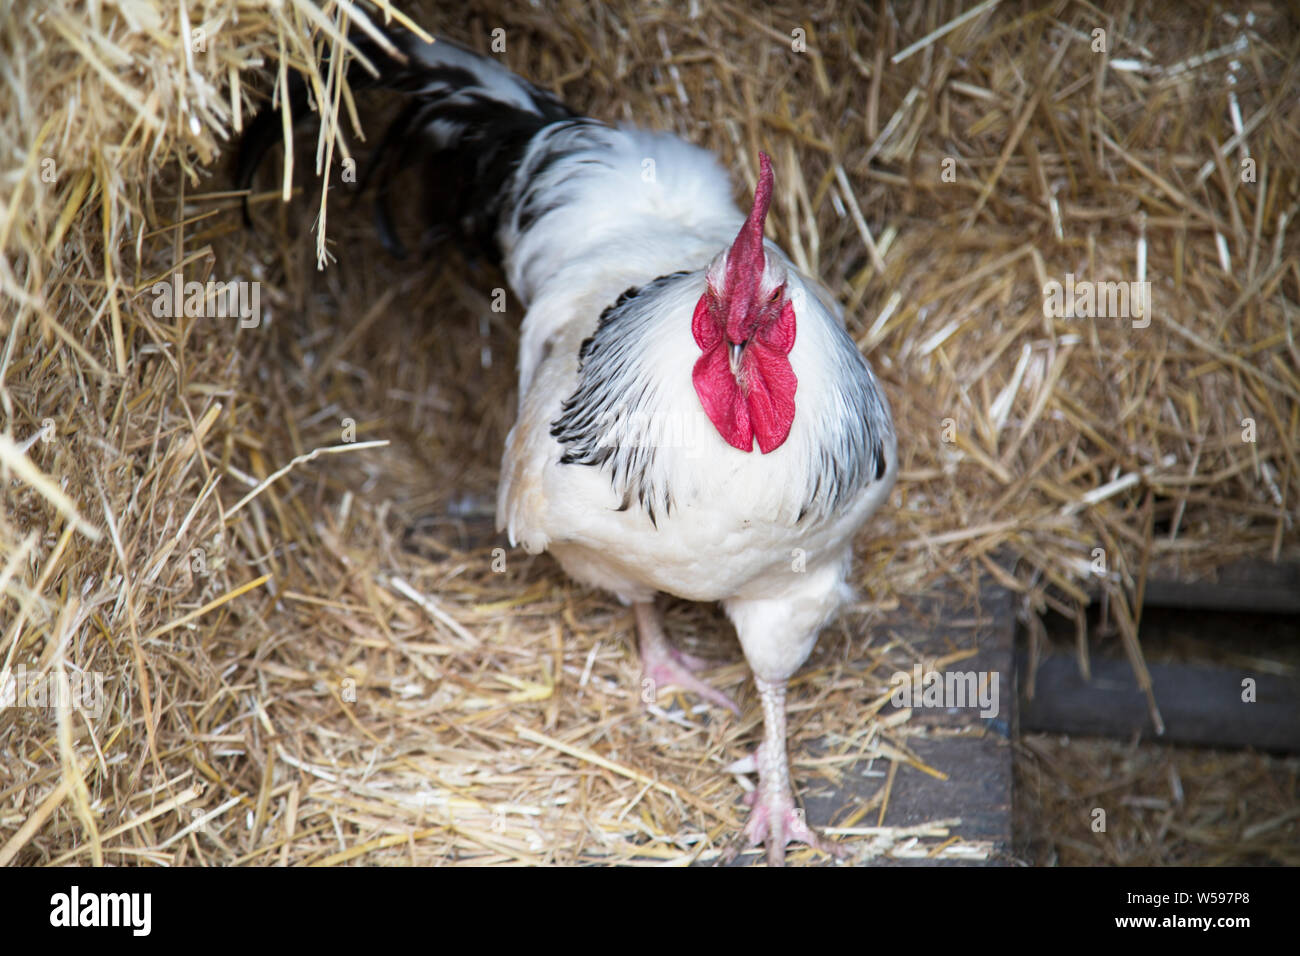 Sussex breed chicken, Sussex, England Stock Photo